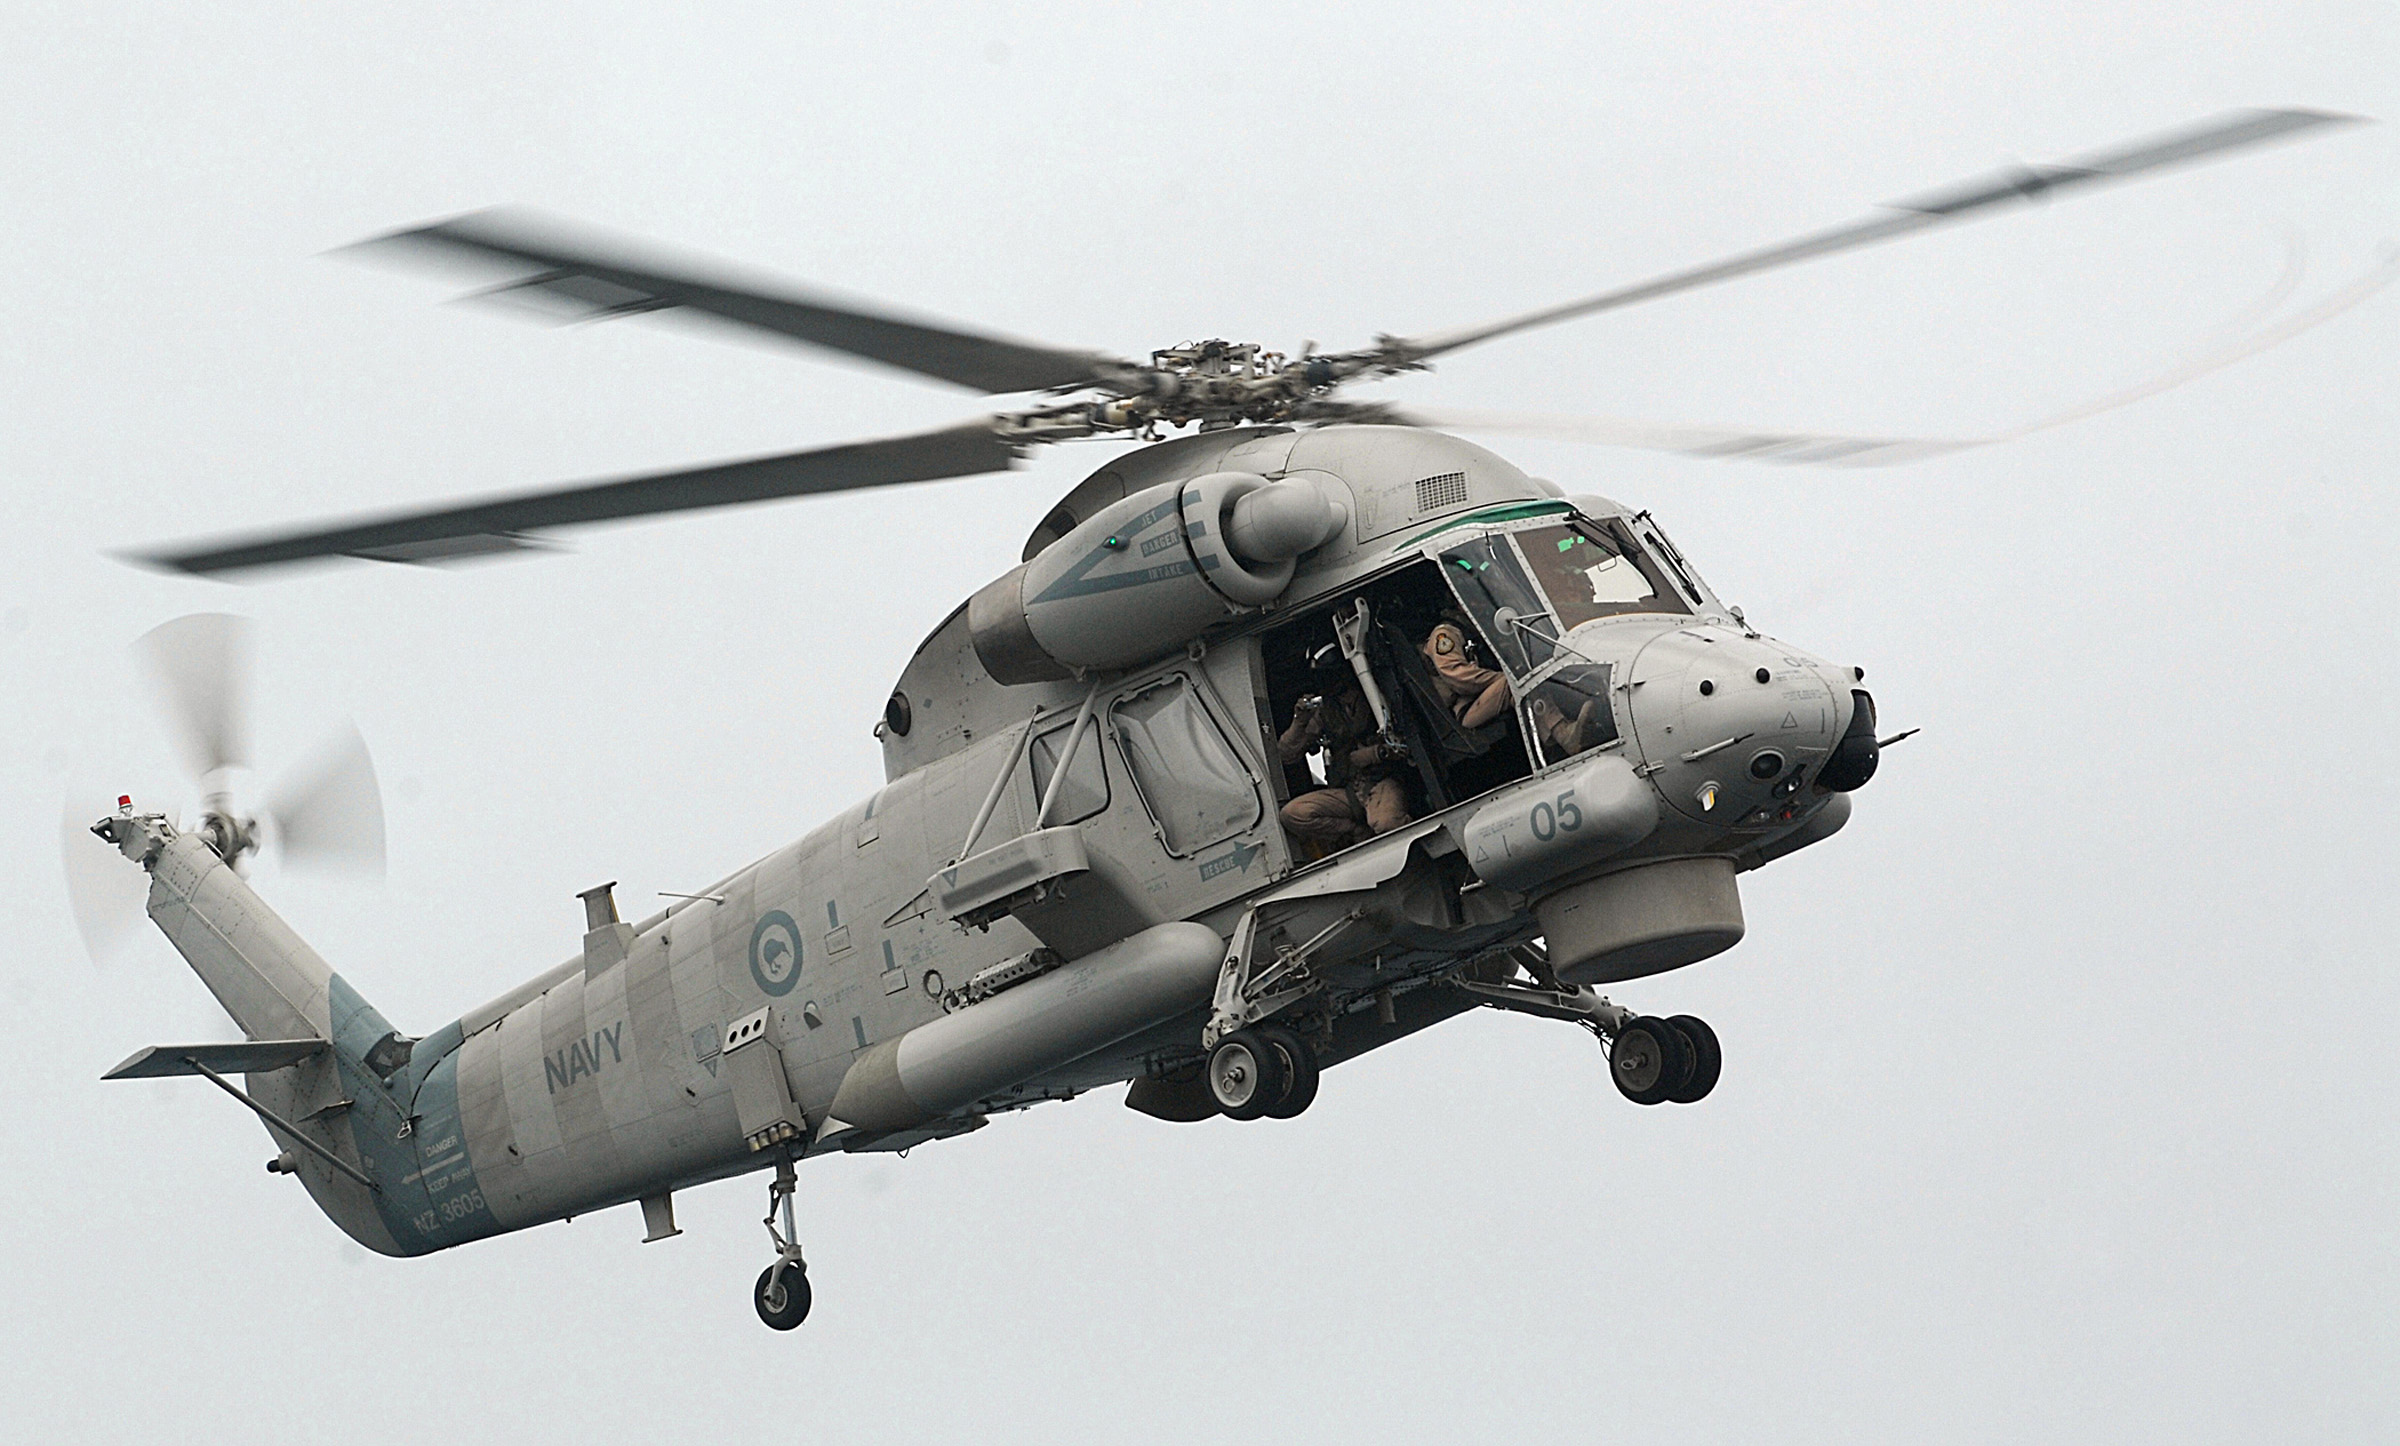 Kaman SH-2G Super Seasprite | Military Wiki | FANDOM powered by Wikia